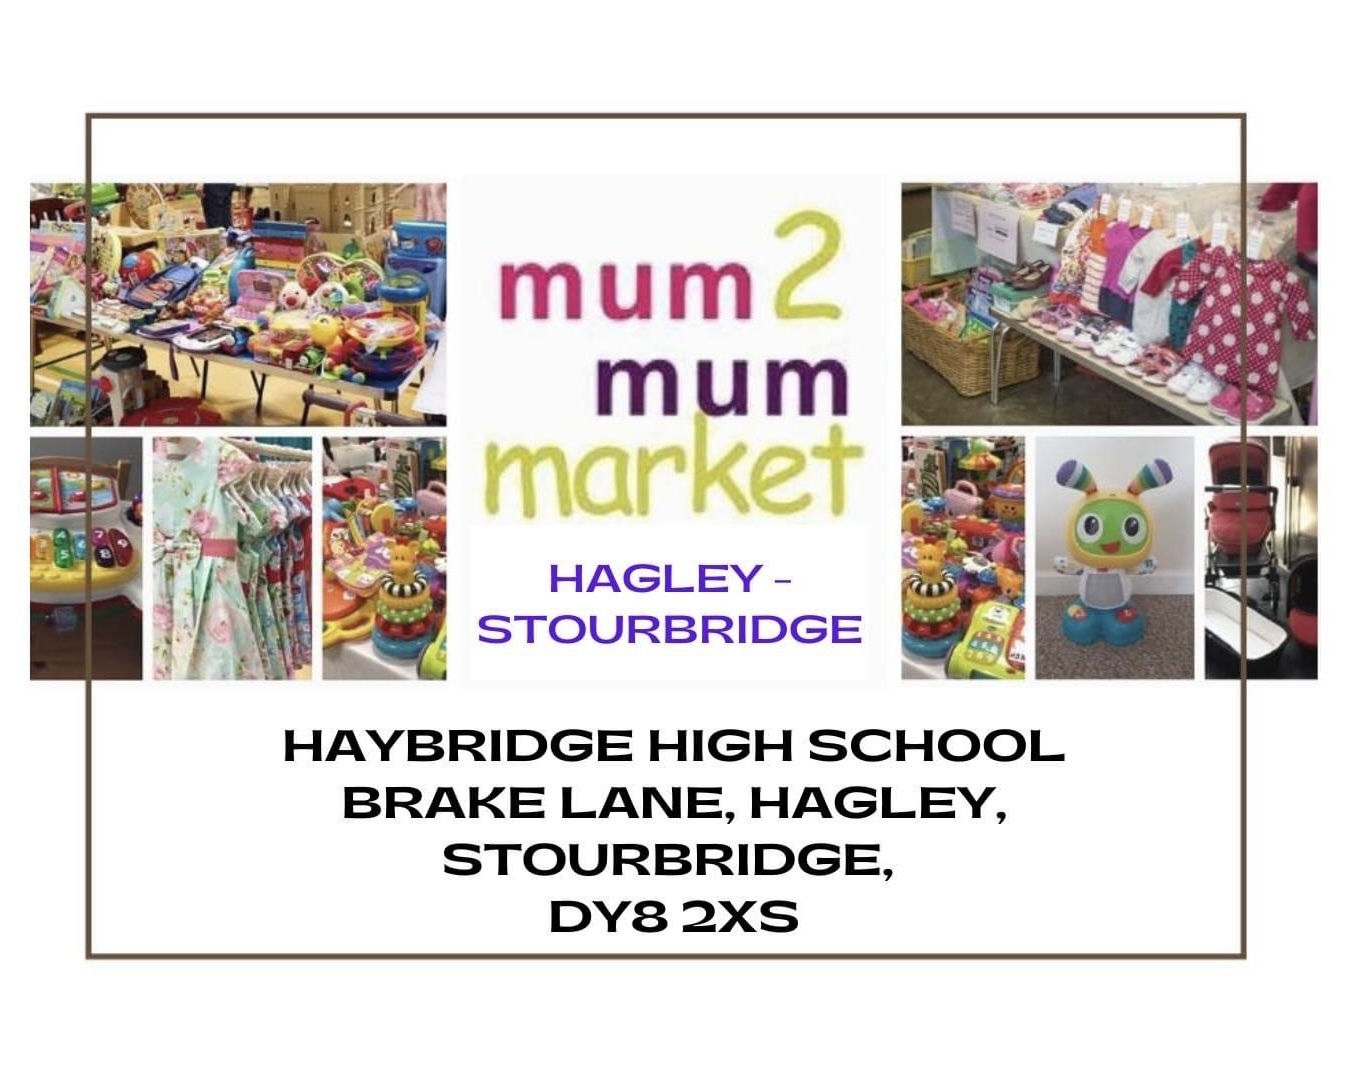 Mum2Mum Market - The Best Event for Nearly New Baby and Children's items, Stourbridge, England, United Kingdom